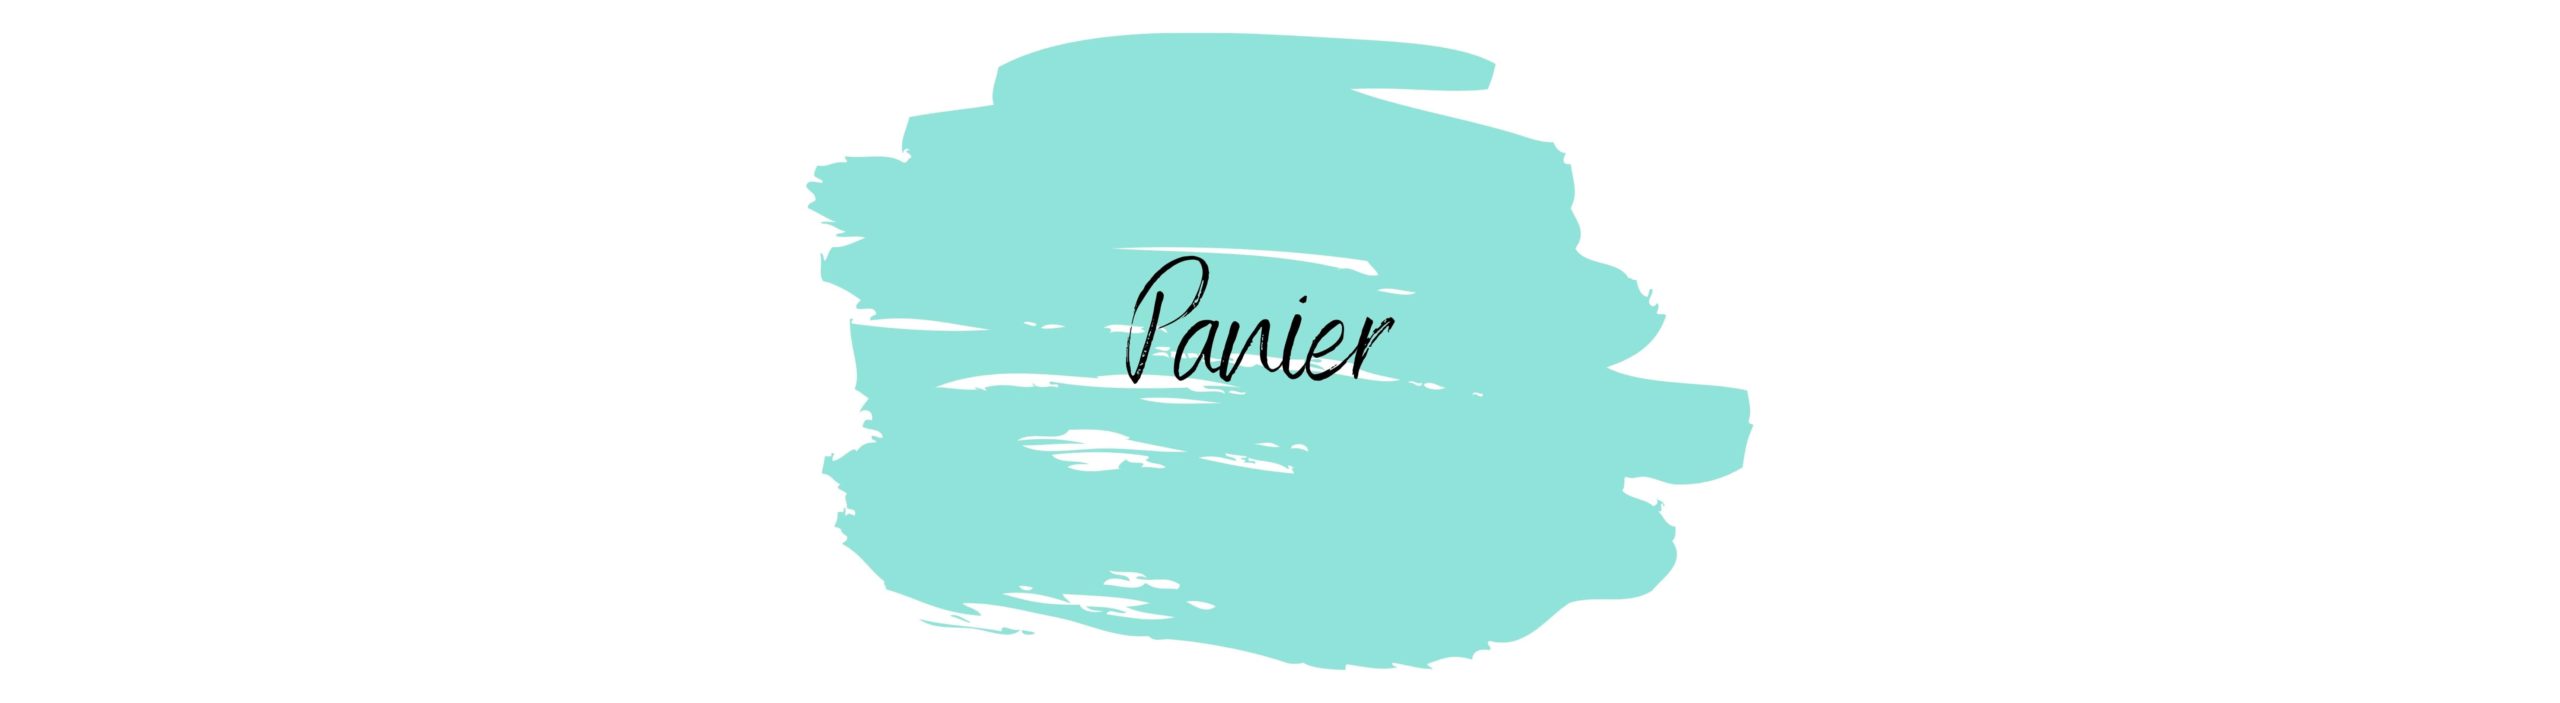 panier - page